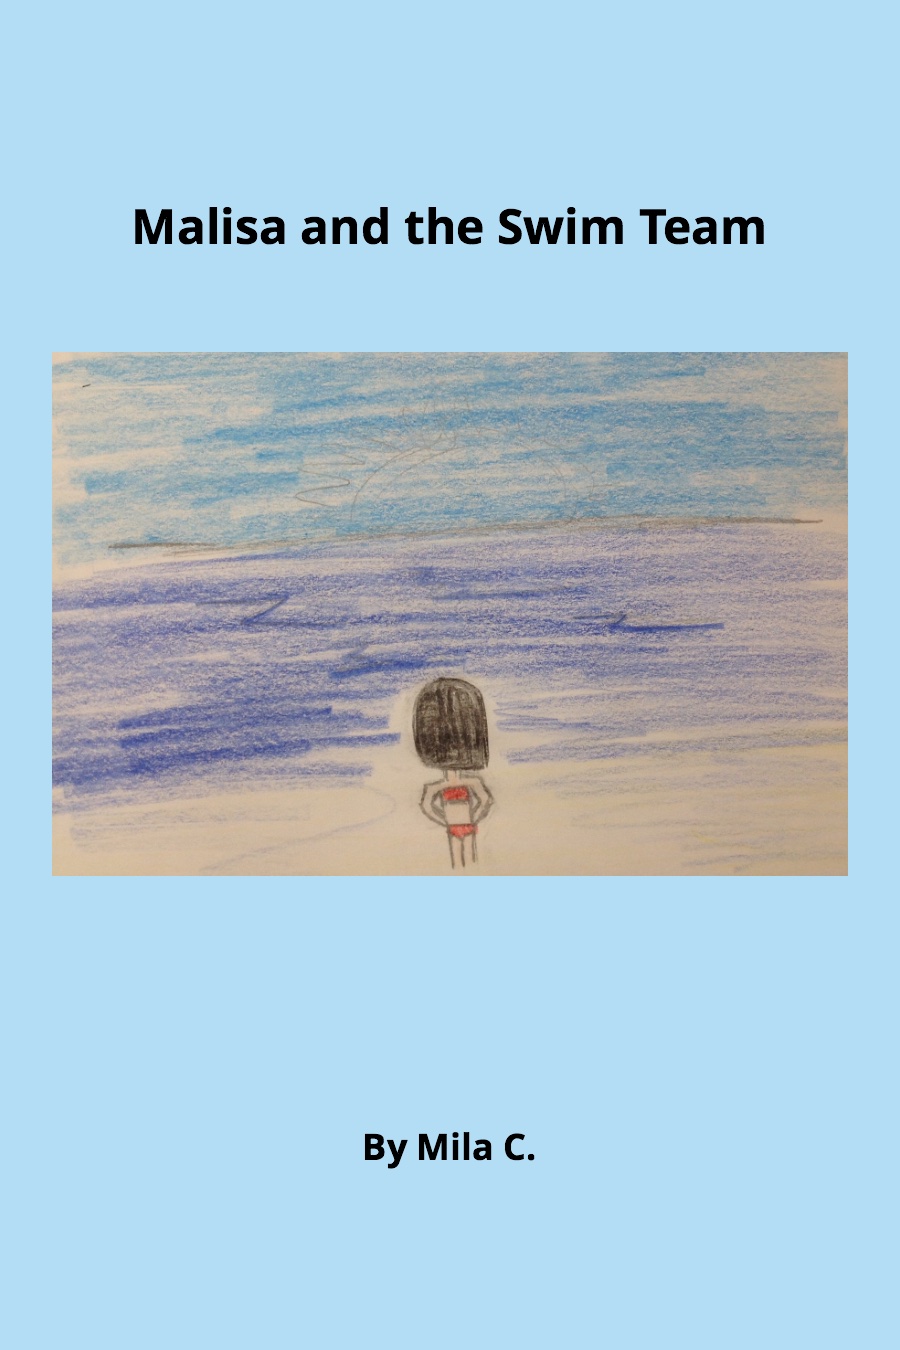 Malisa and The Swim Team by Mila C